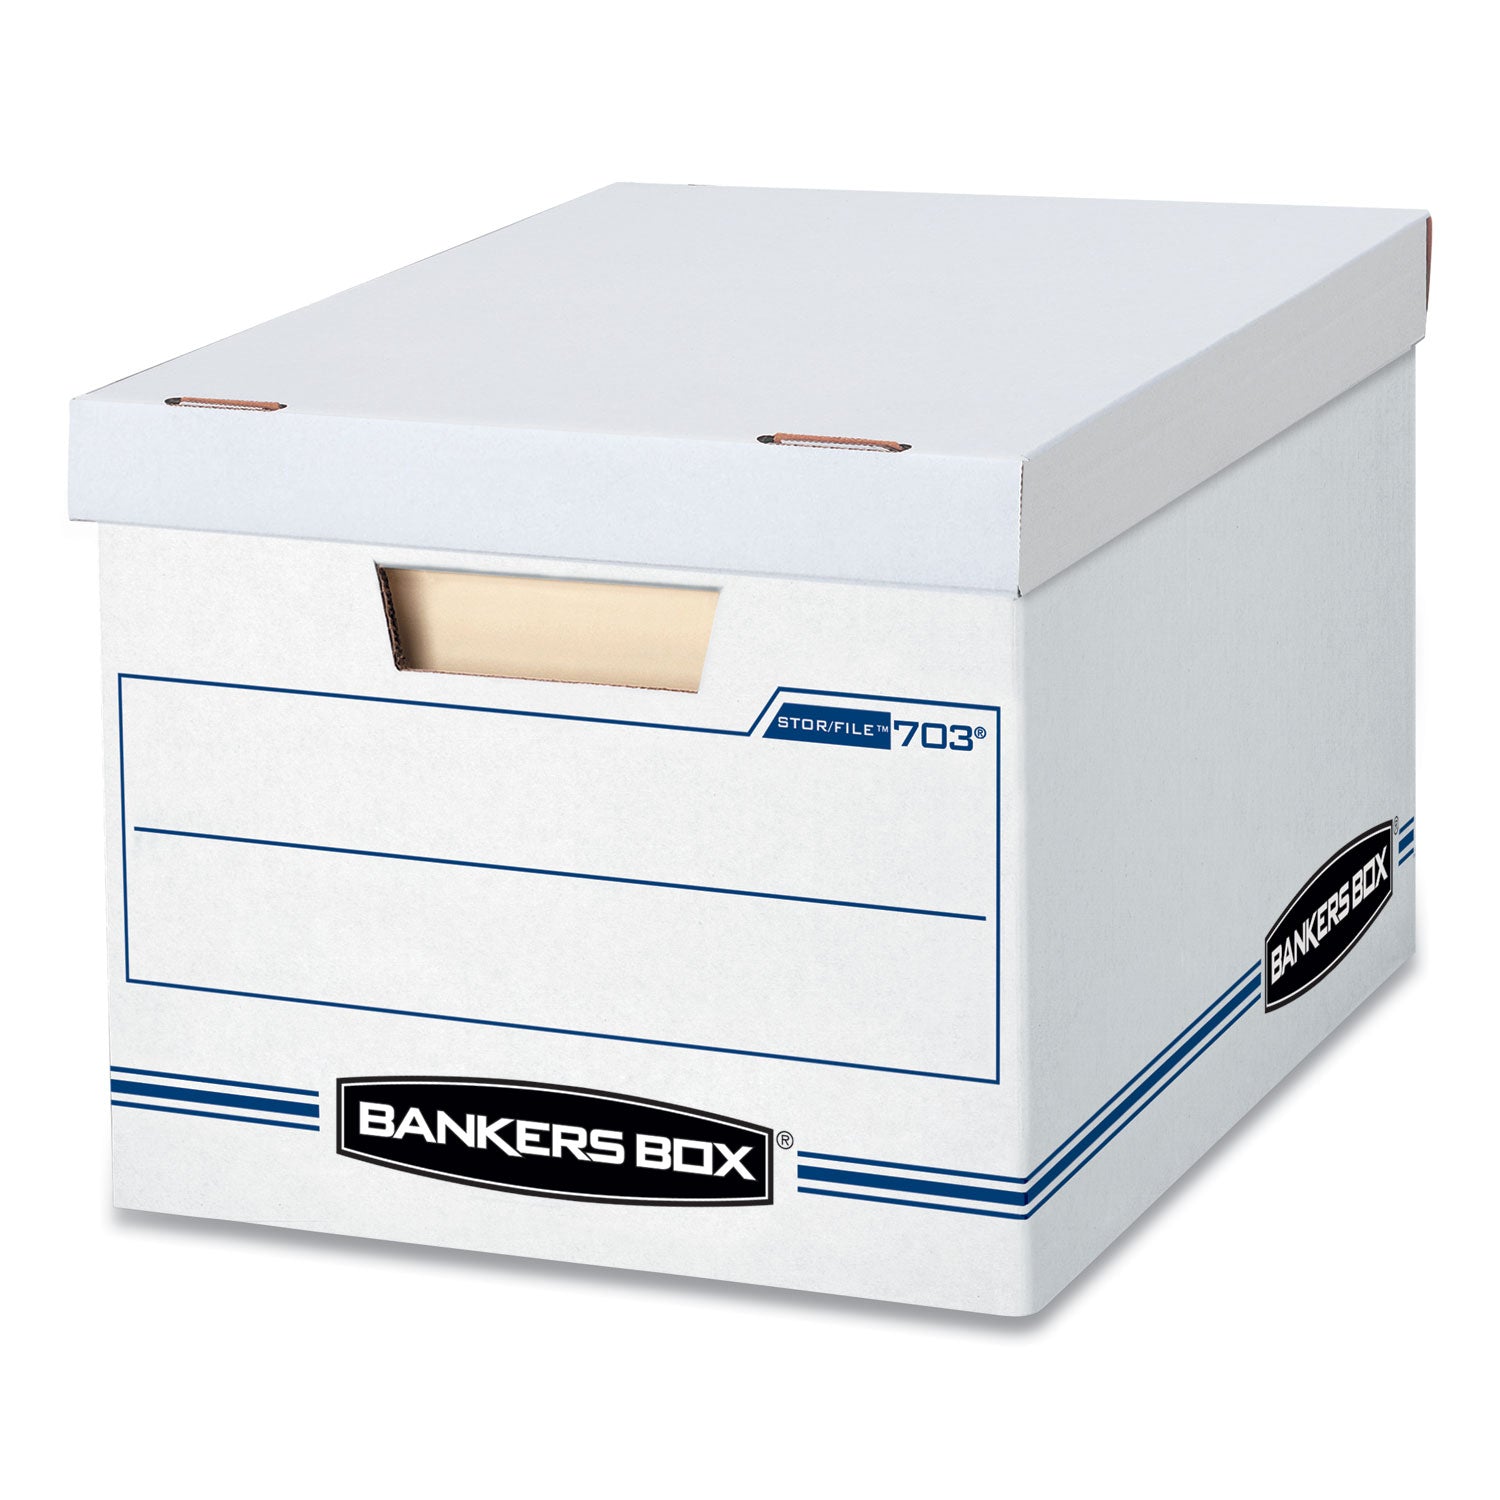 STOR/FILE Basic-Duty Storage Boxes, Letter/Legal Files, 12.5" x 16.25" x 10.5", White/Blue, 12/Carton - 